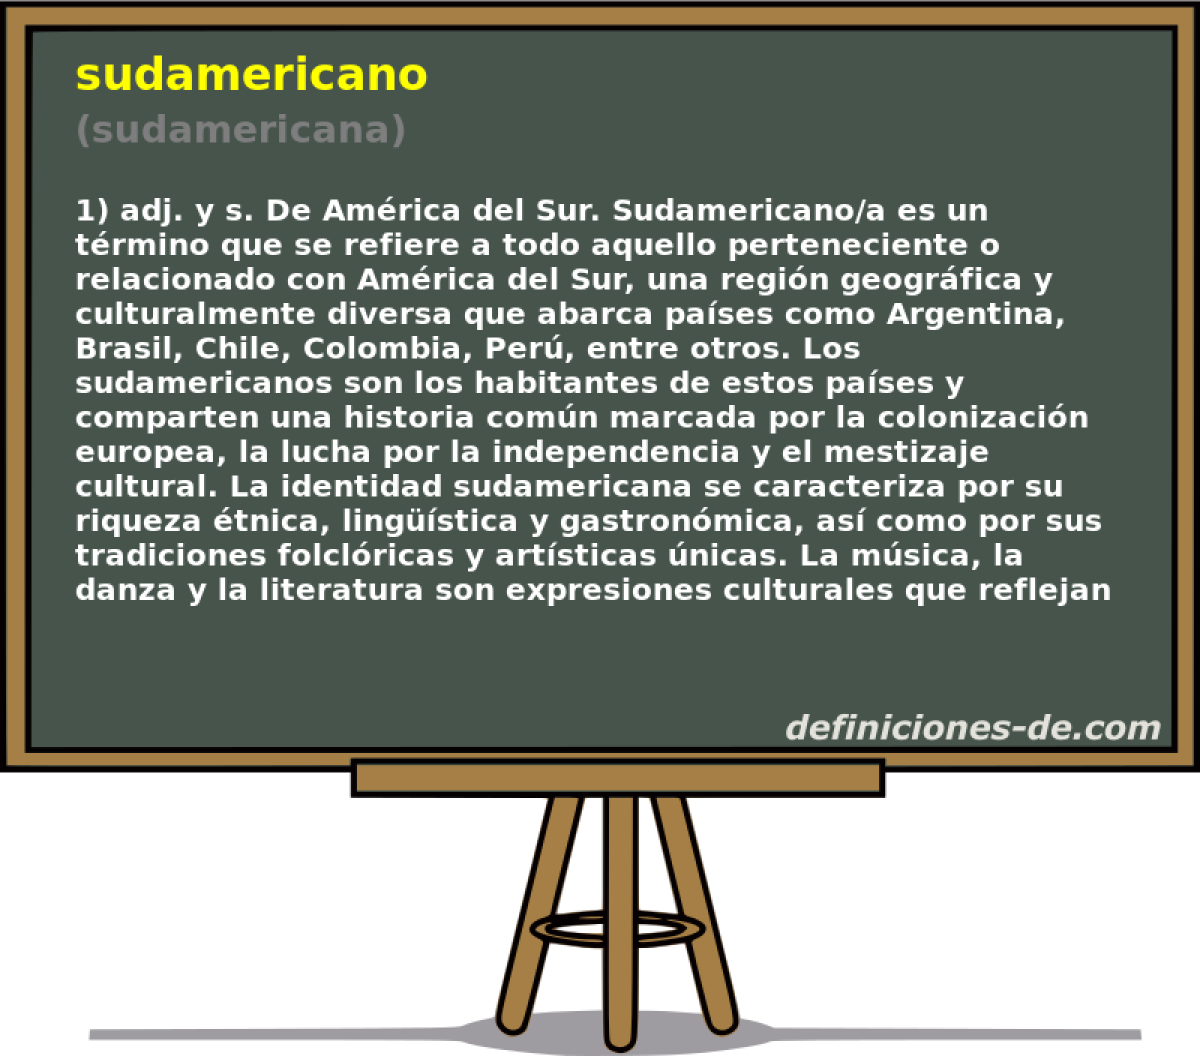 sudamericano (sudamericana)